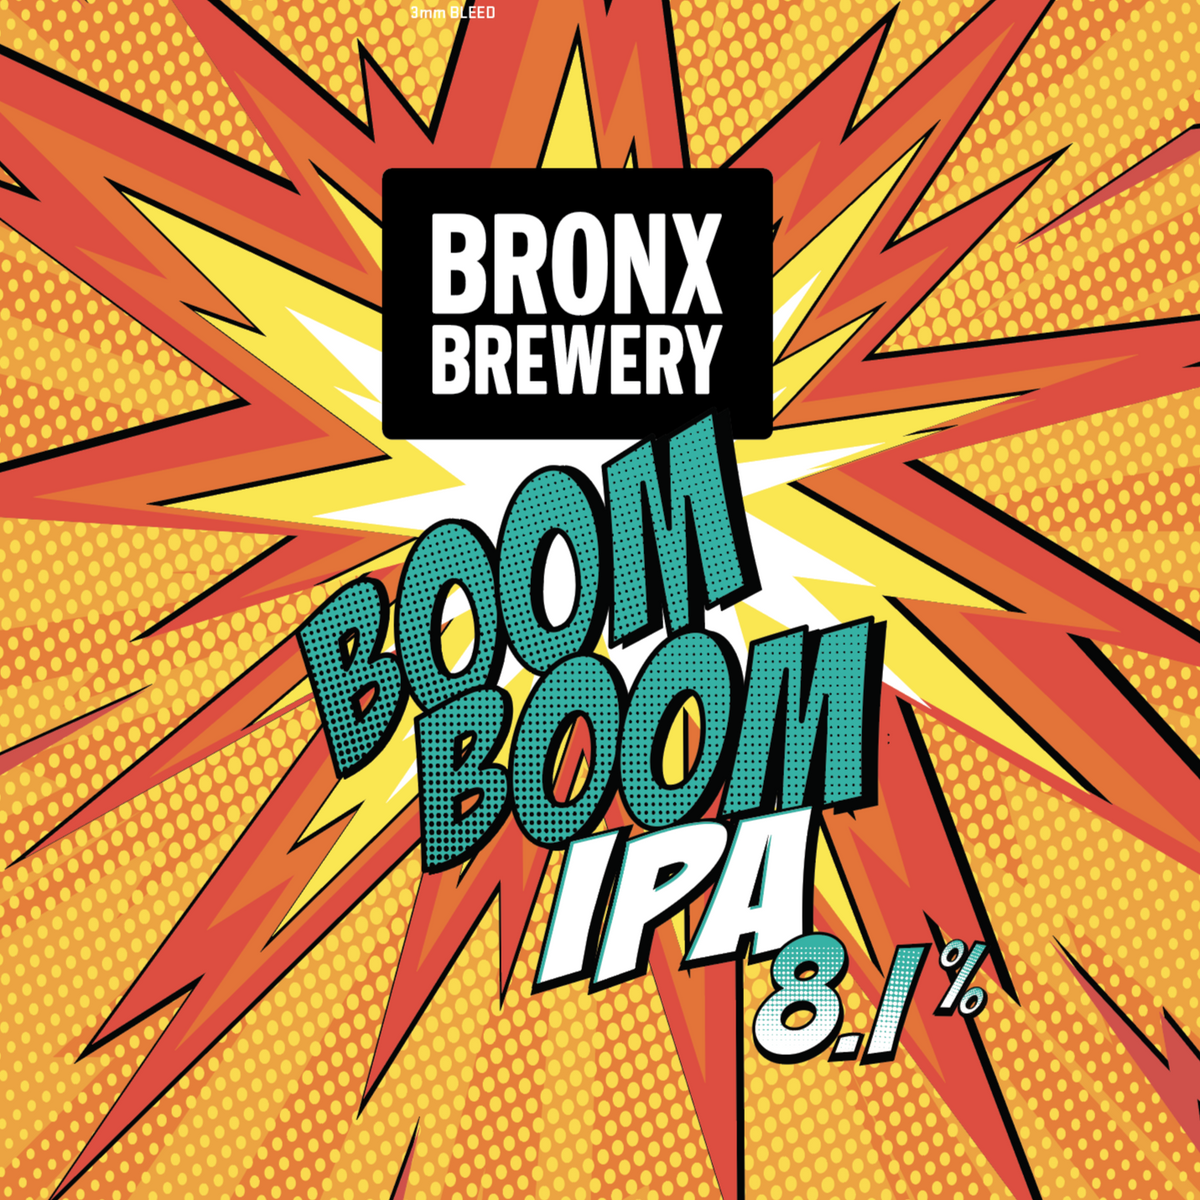 Bronx Brewery Boom Boom IPA 8.1%